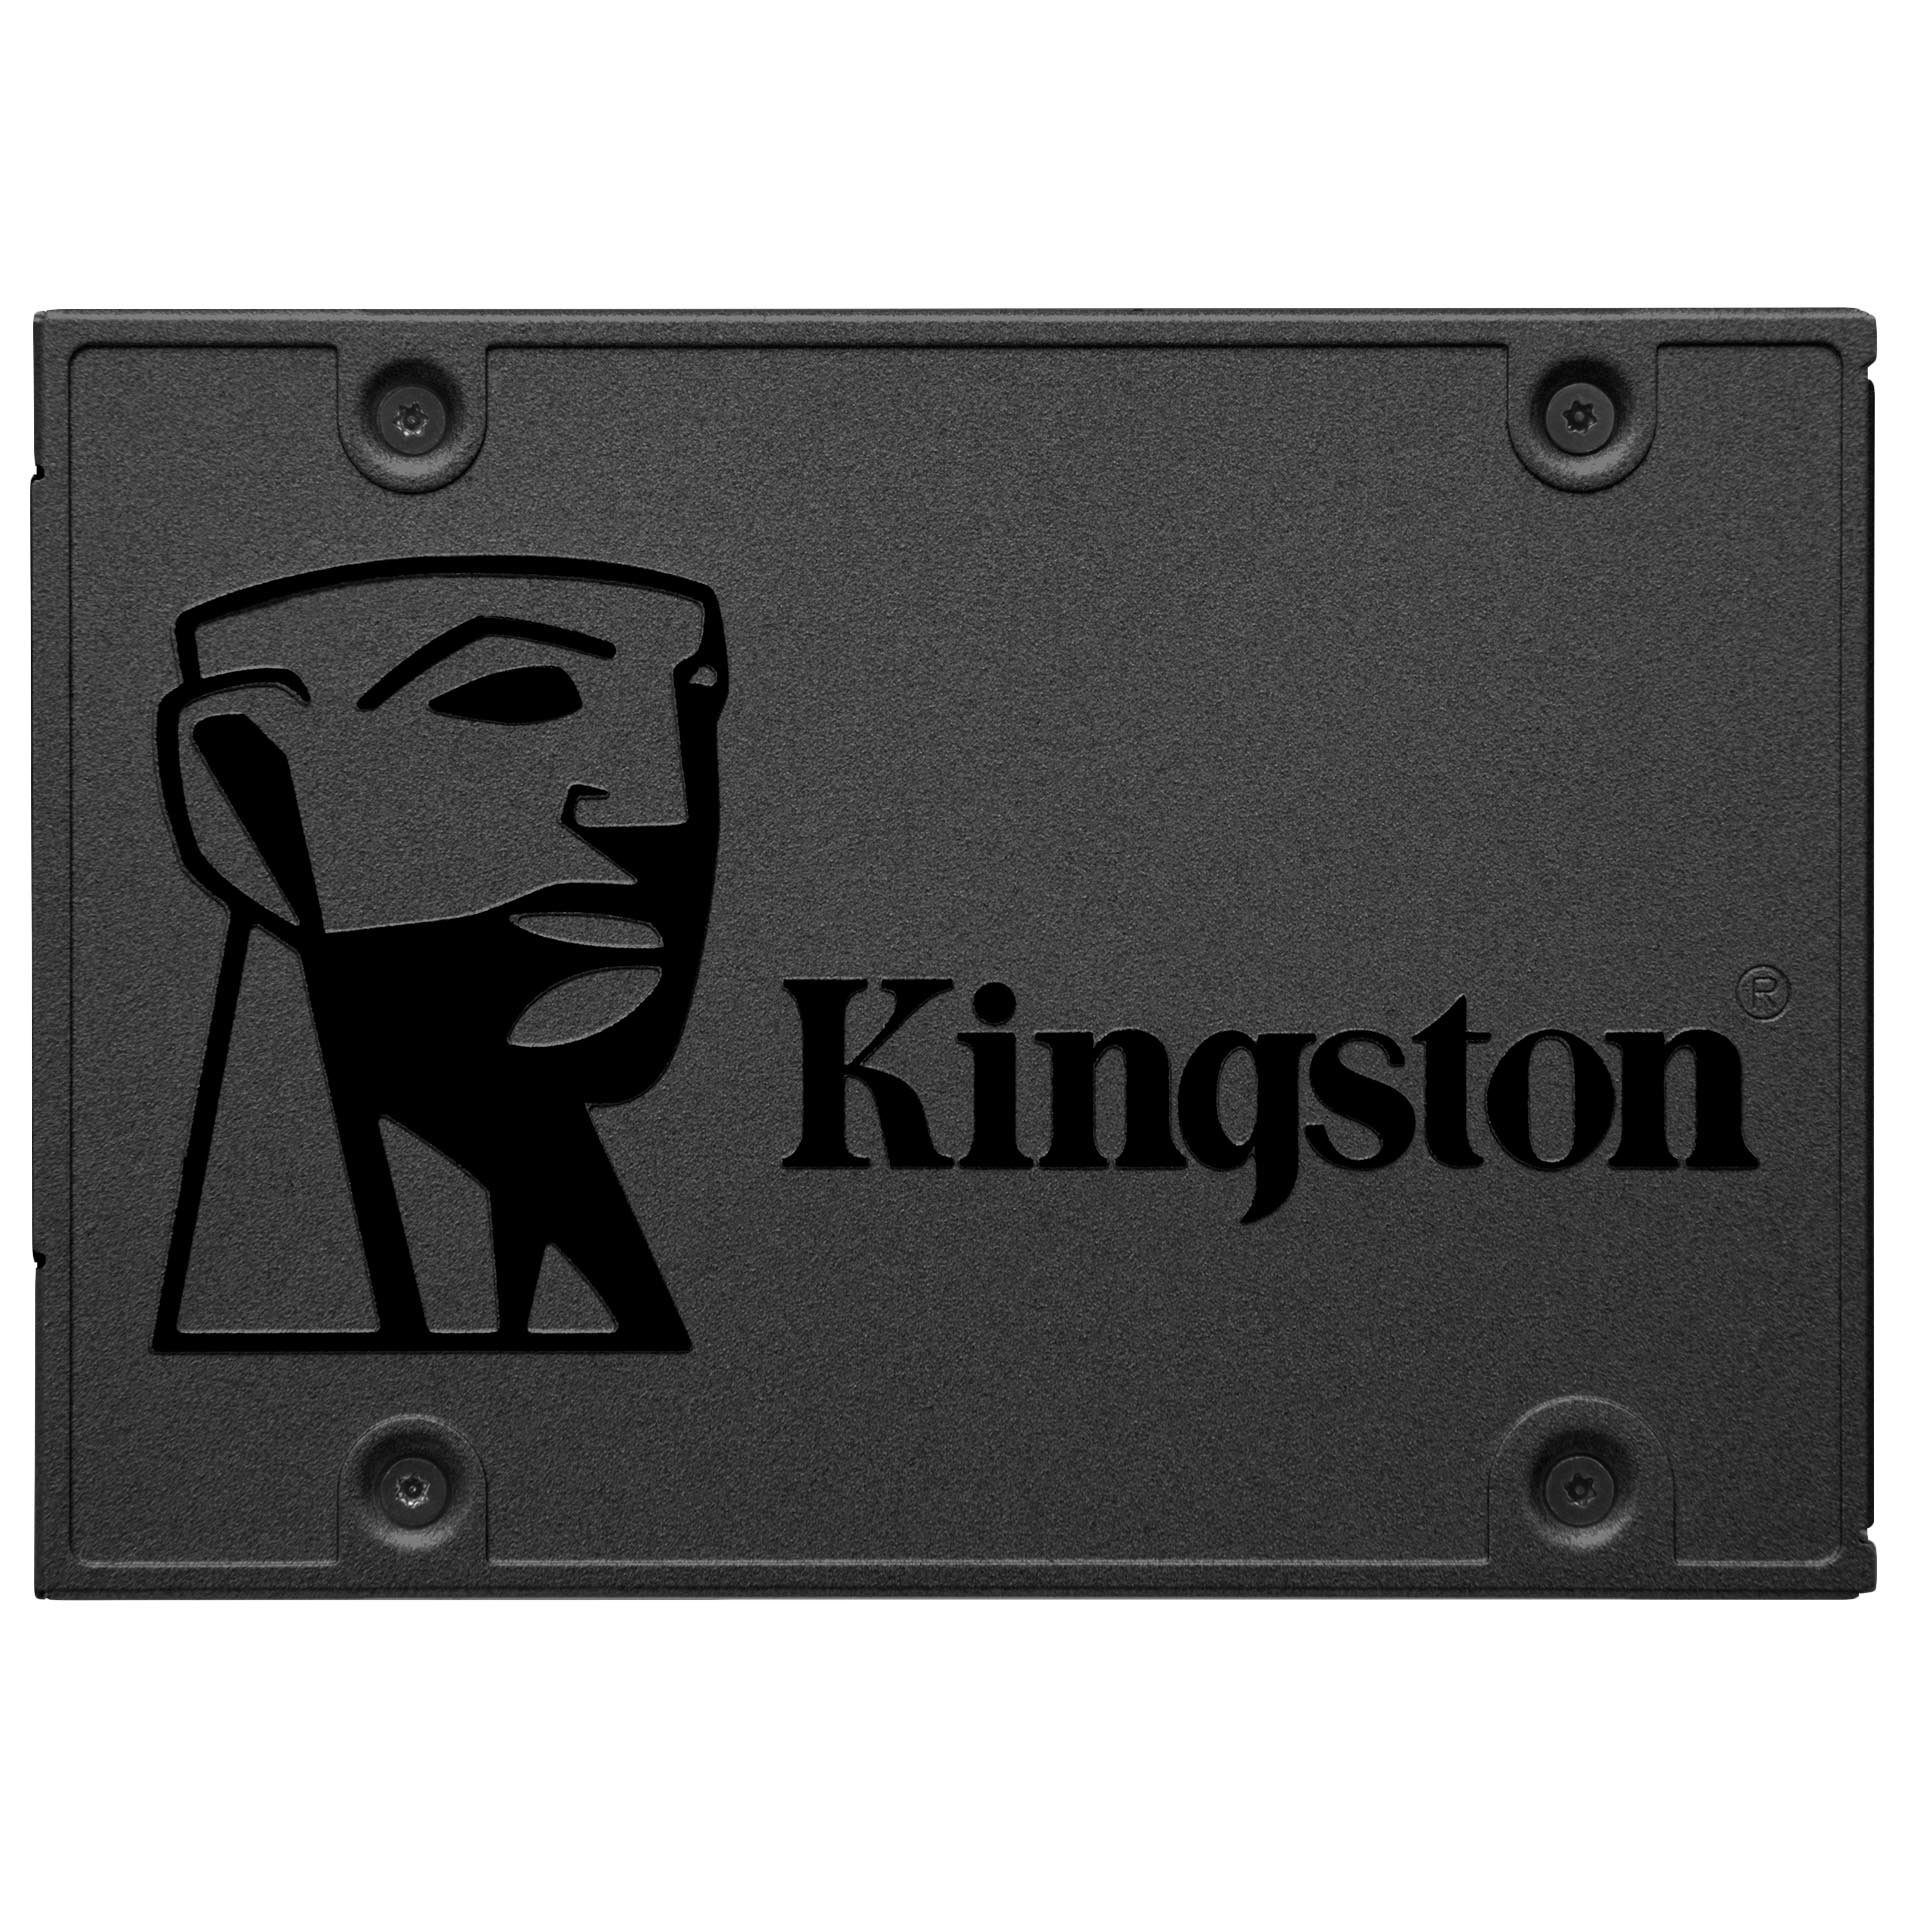 Внутренний твердотельный накопитель Kingston A400, SA400S37/480G, 480Гб, 2,5 внутренний ssd накопитель kingston 120gb a400 sa400m8 120g